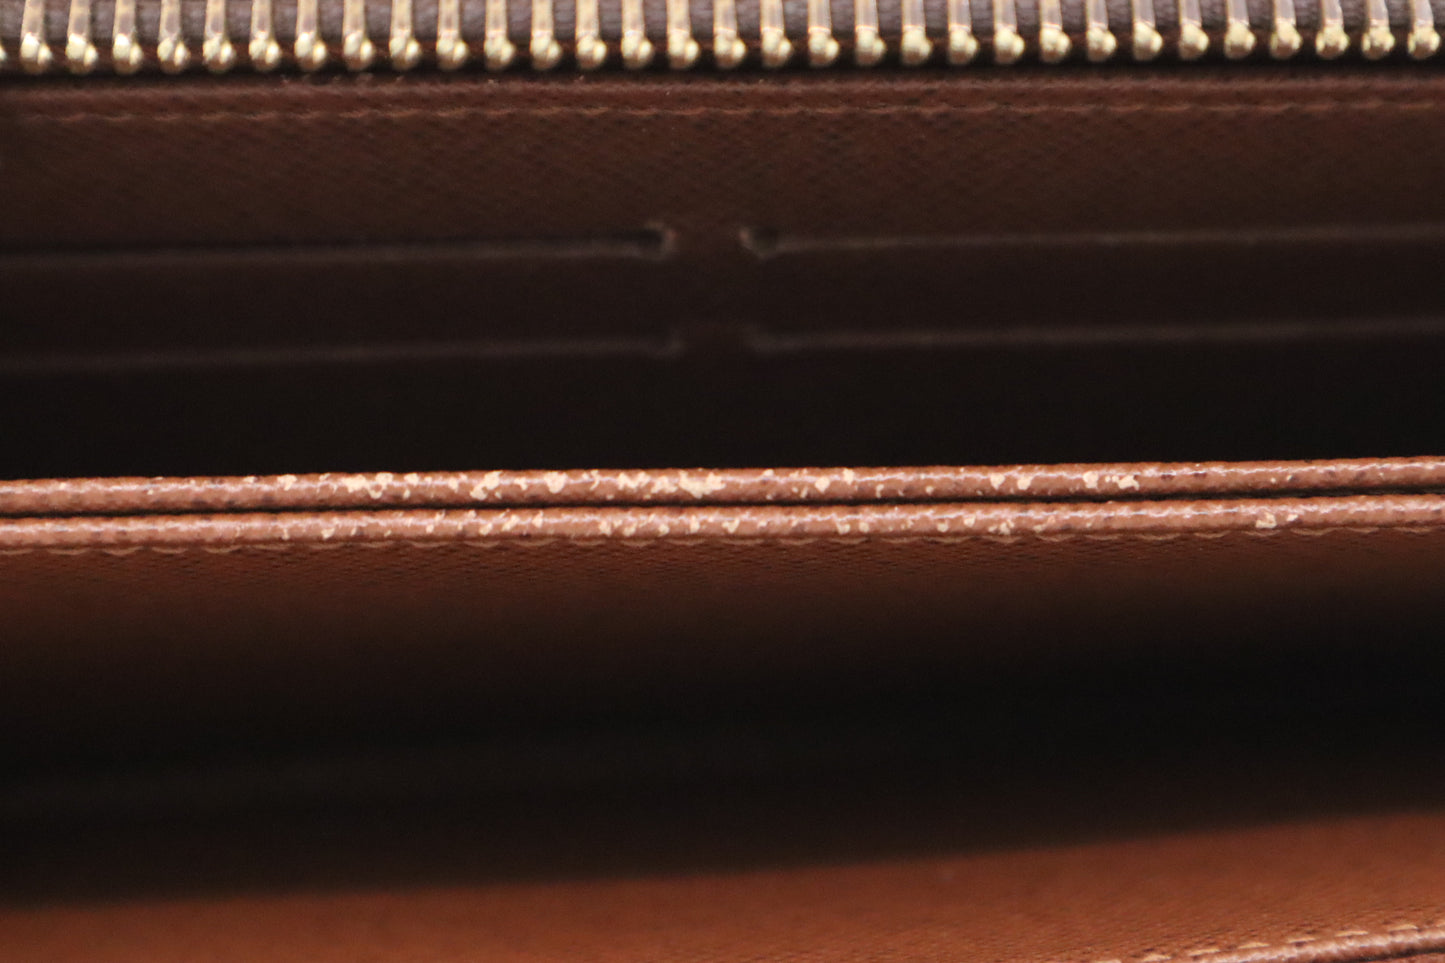 Louis Vuitton Zippy Wallet in Monogram Canvas